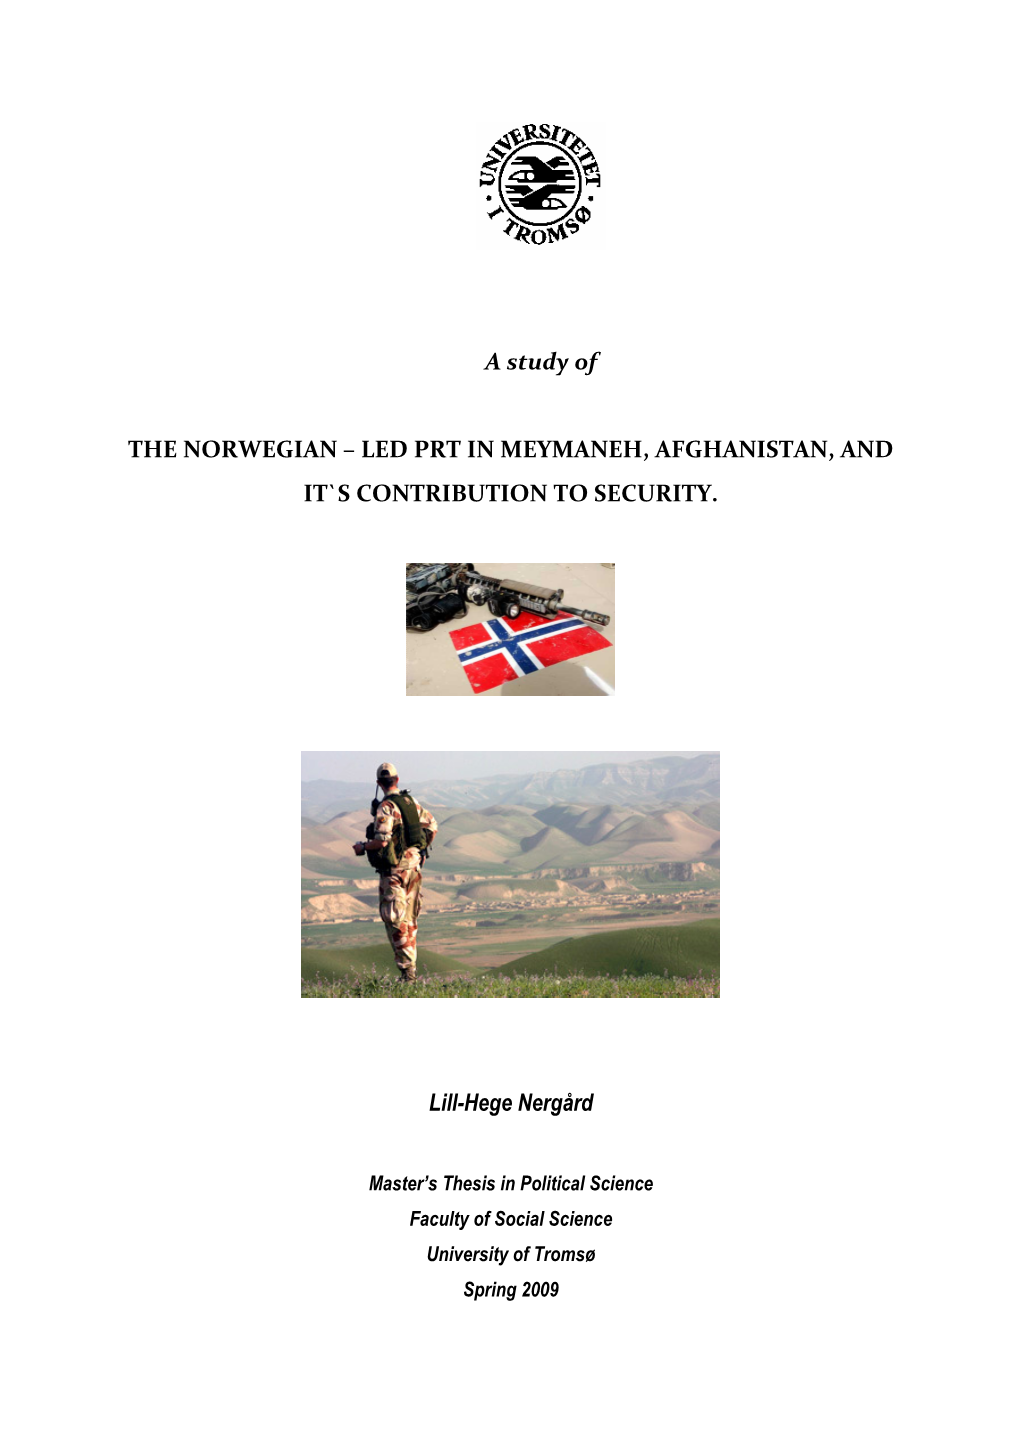 A Study of the NORWEGIAN – LED PRT in MEYMANEH